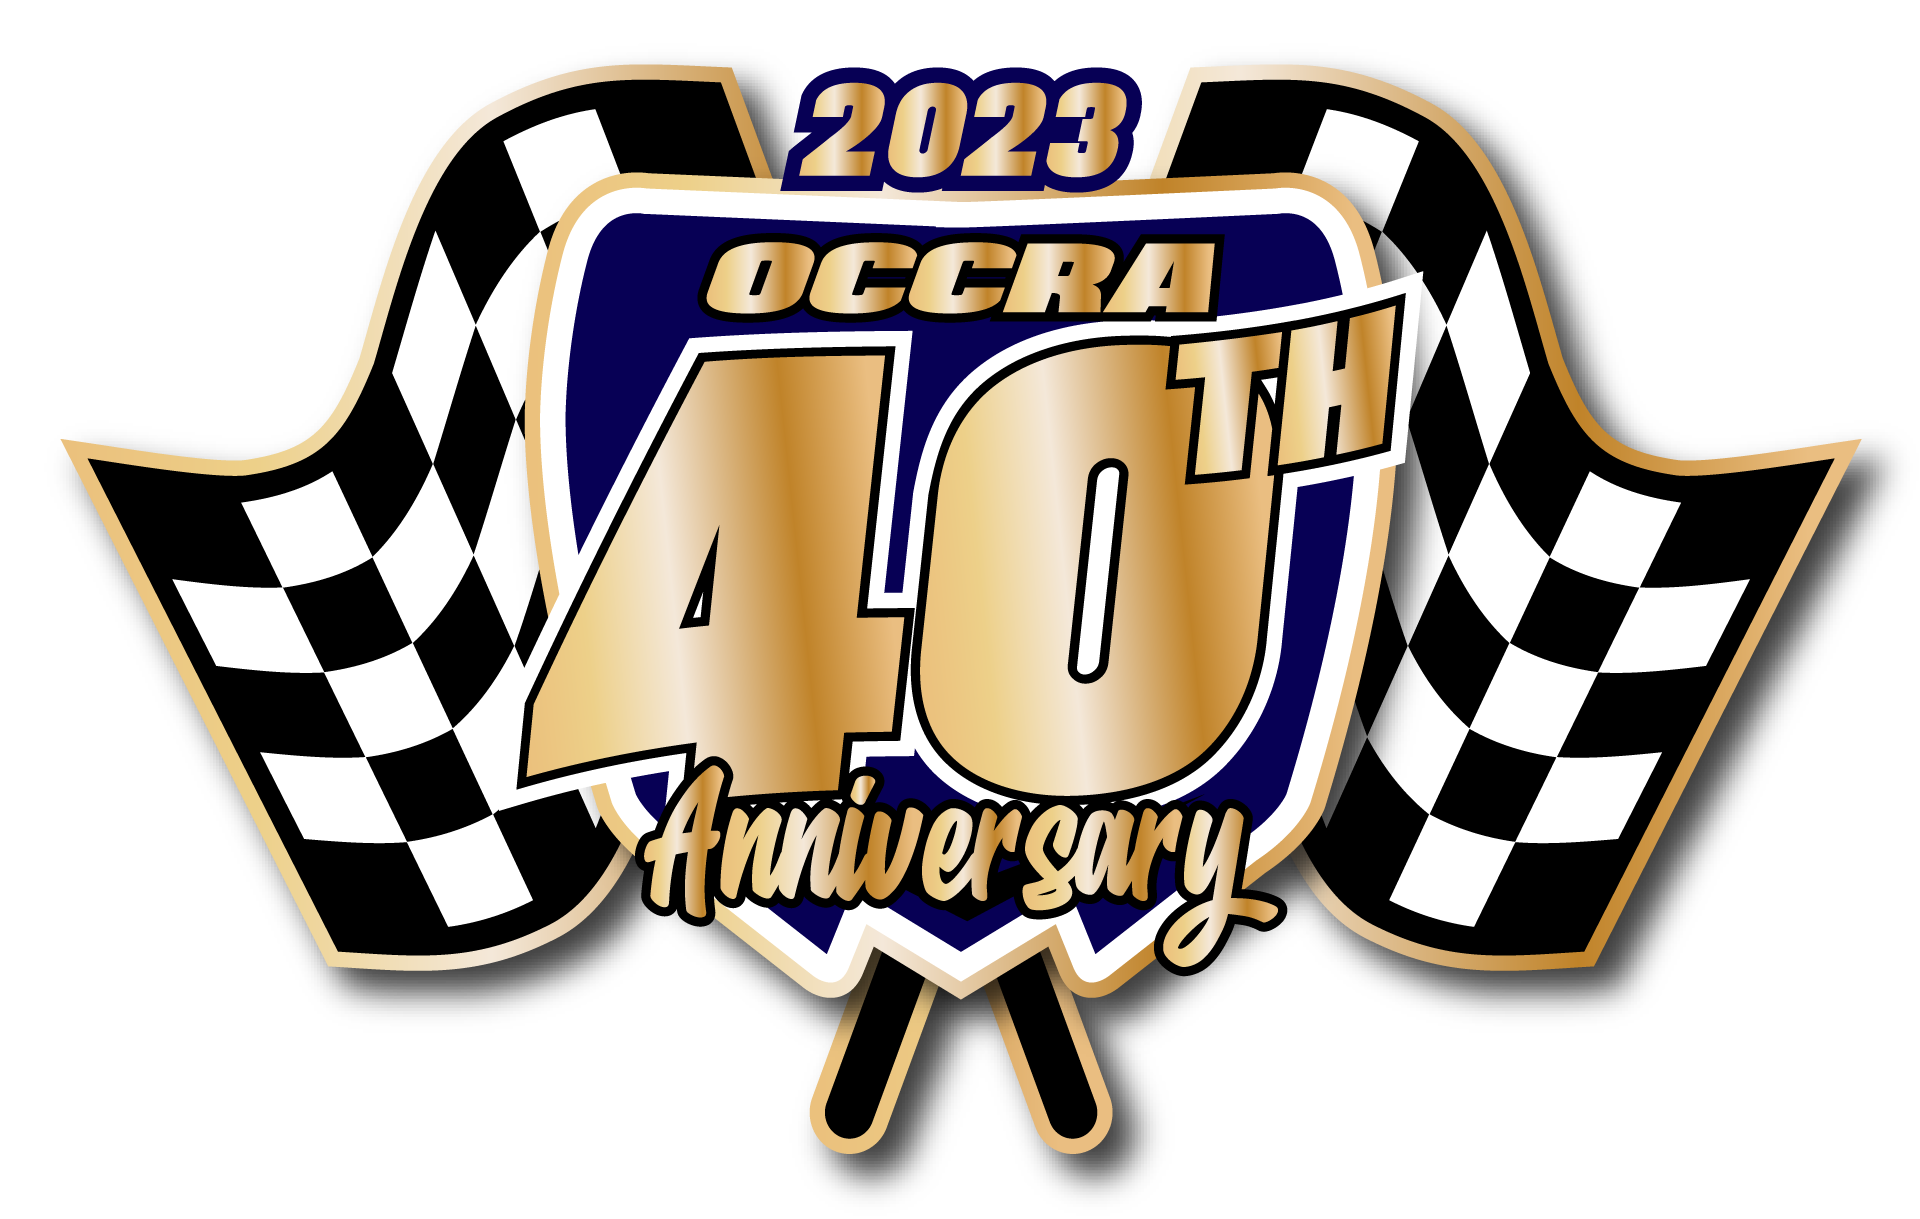 OCCRA 40th Anniversary Logo